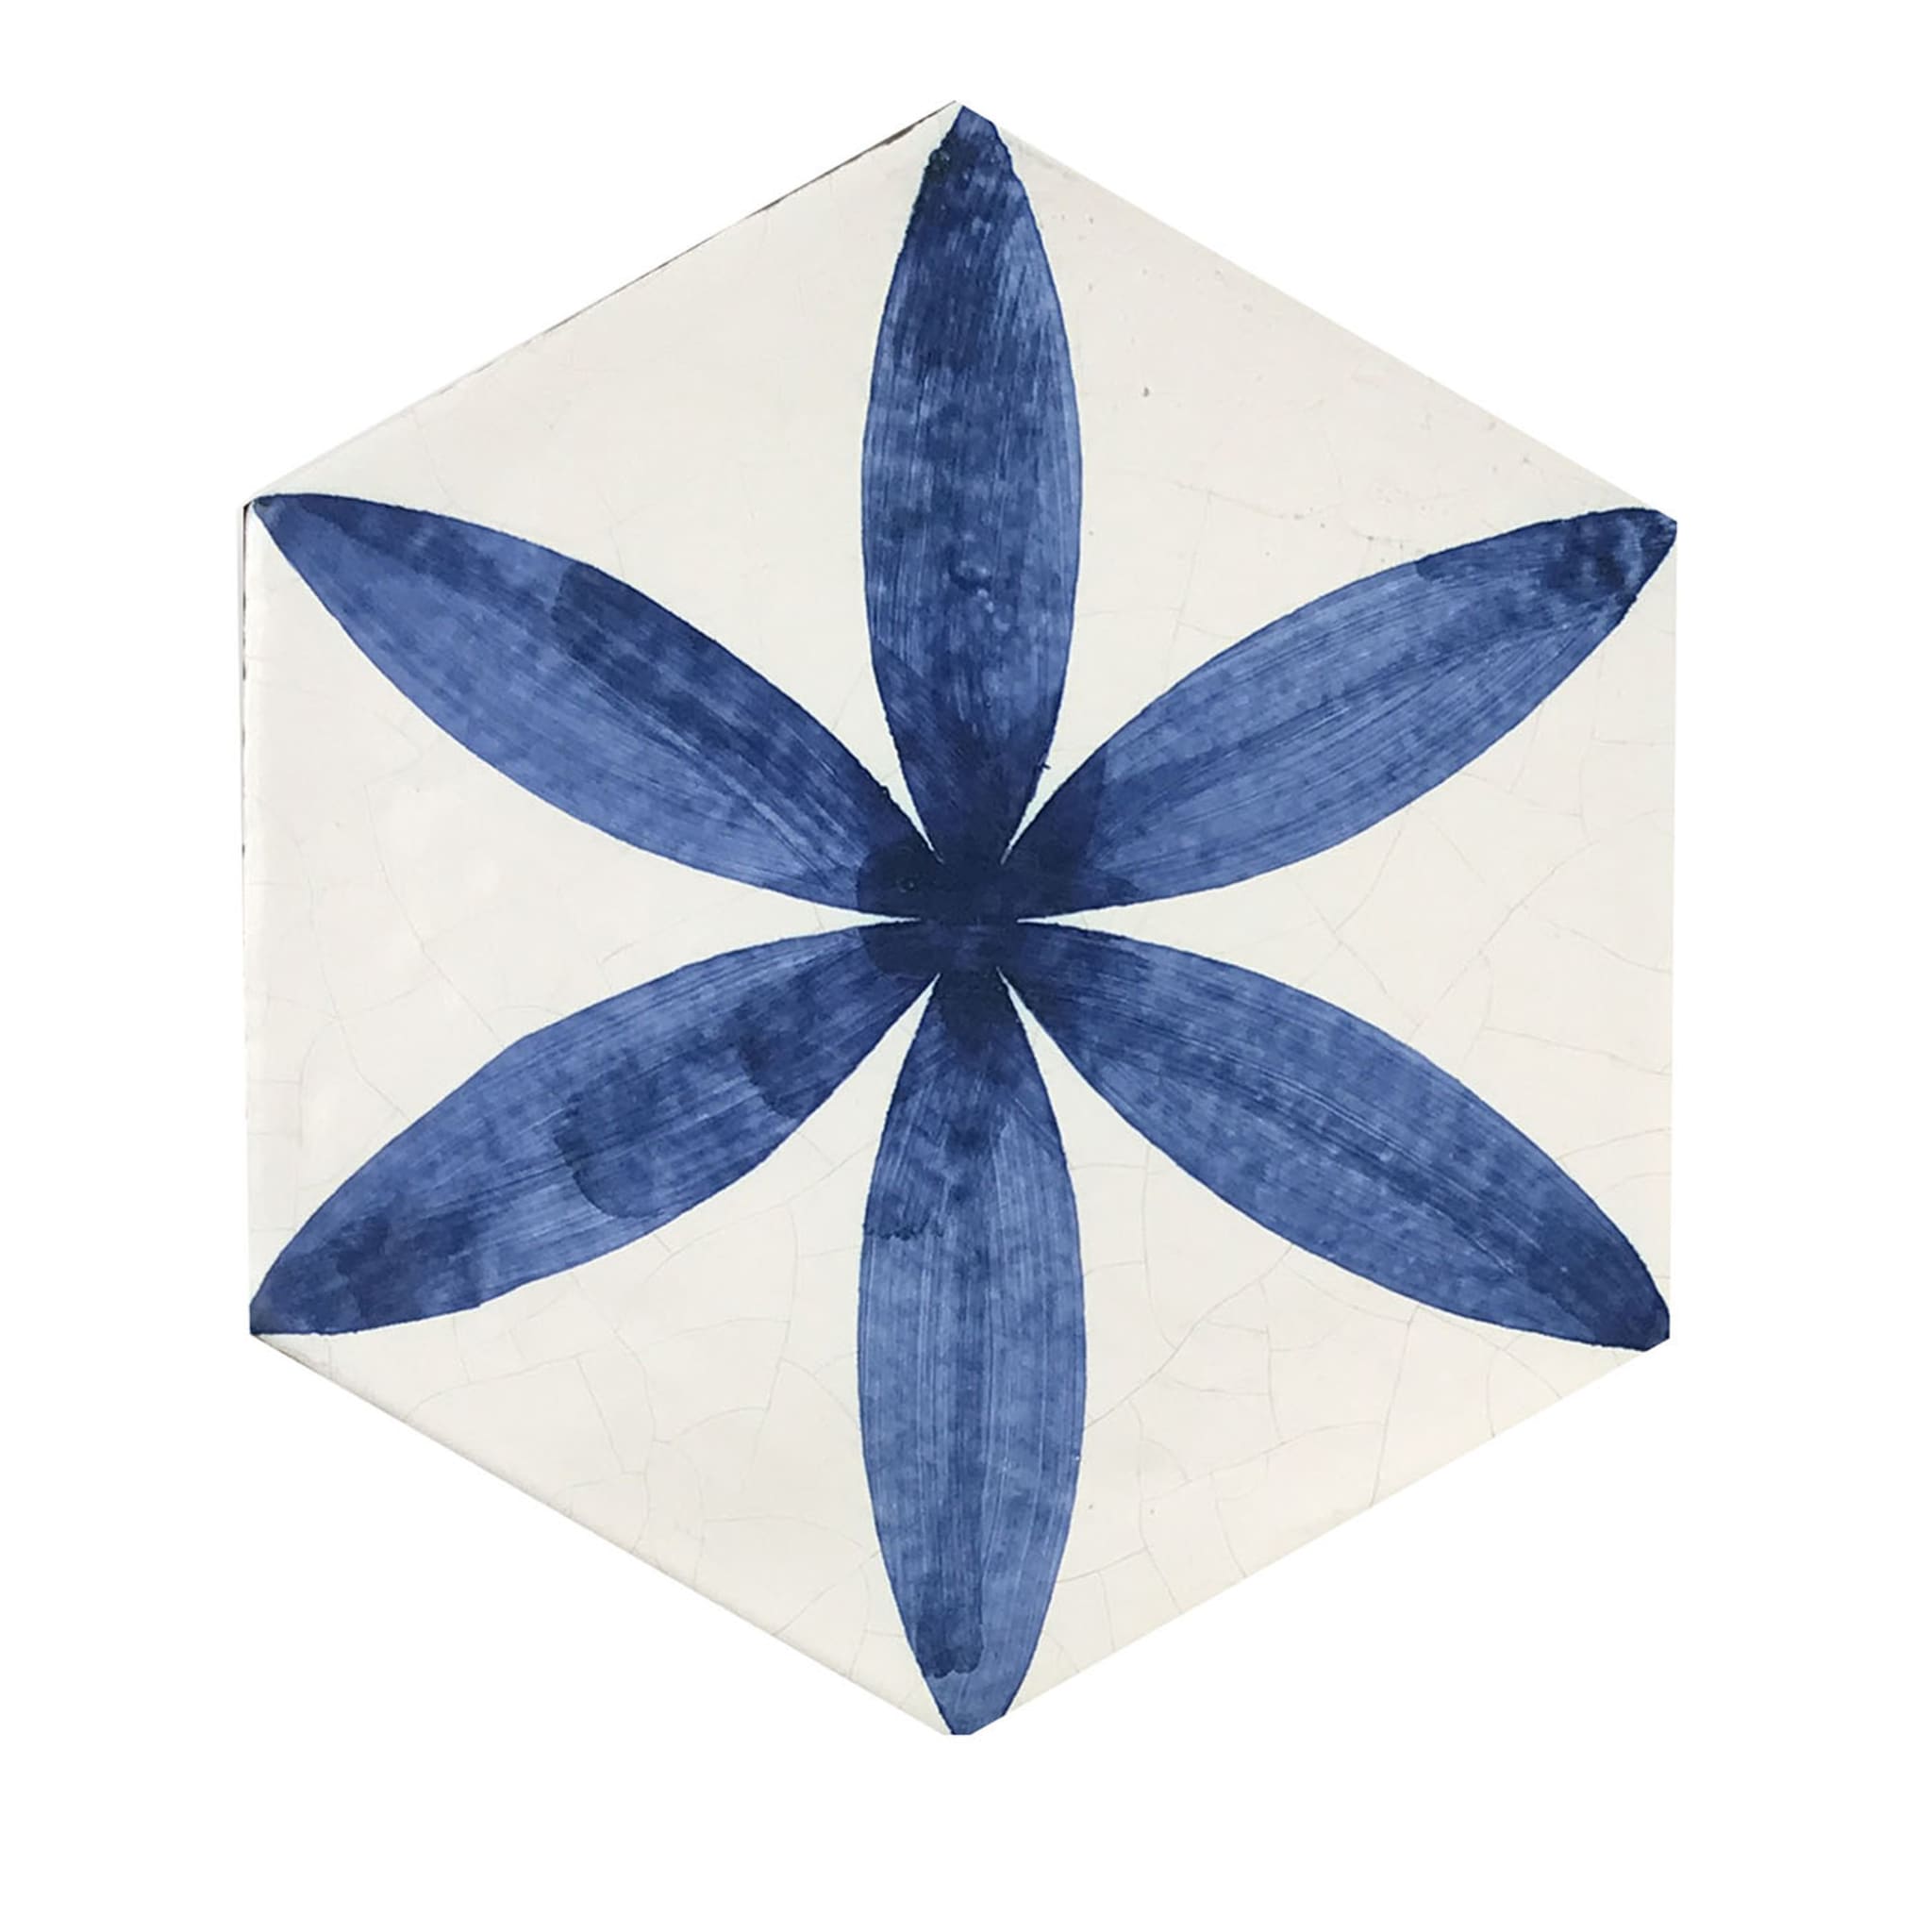 Daamè Set of 28 Hexagonal Blue Tiles #1 - Main view